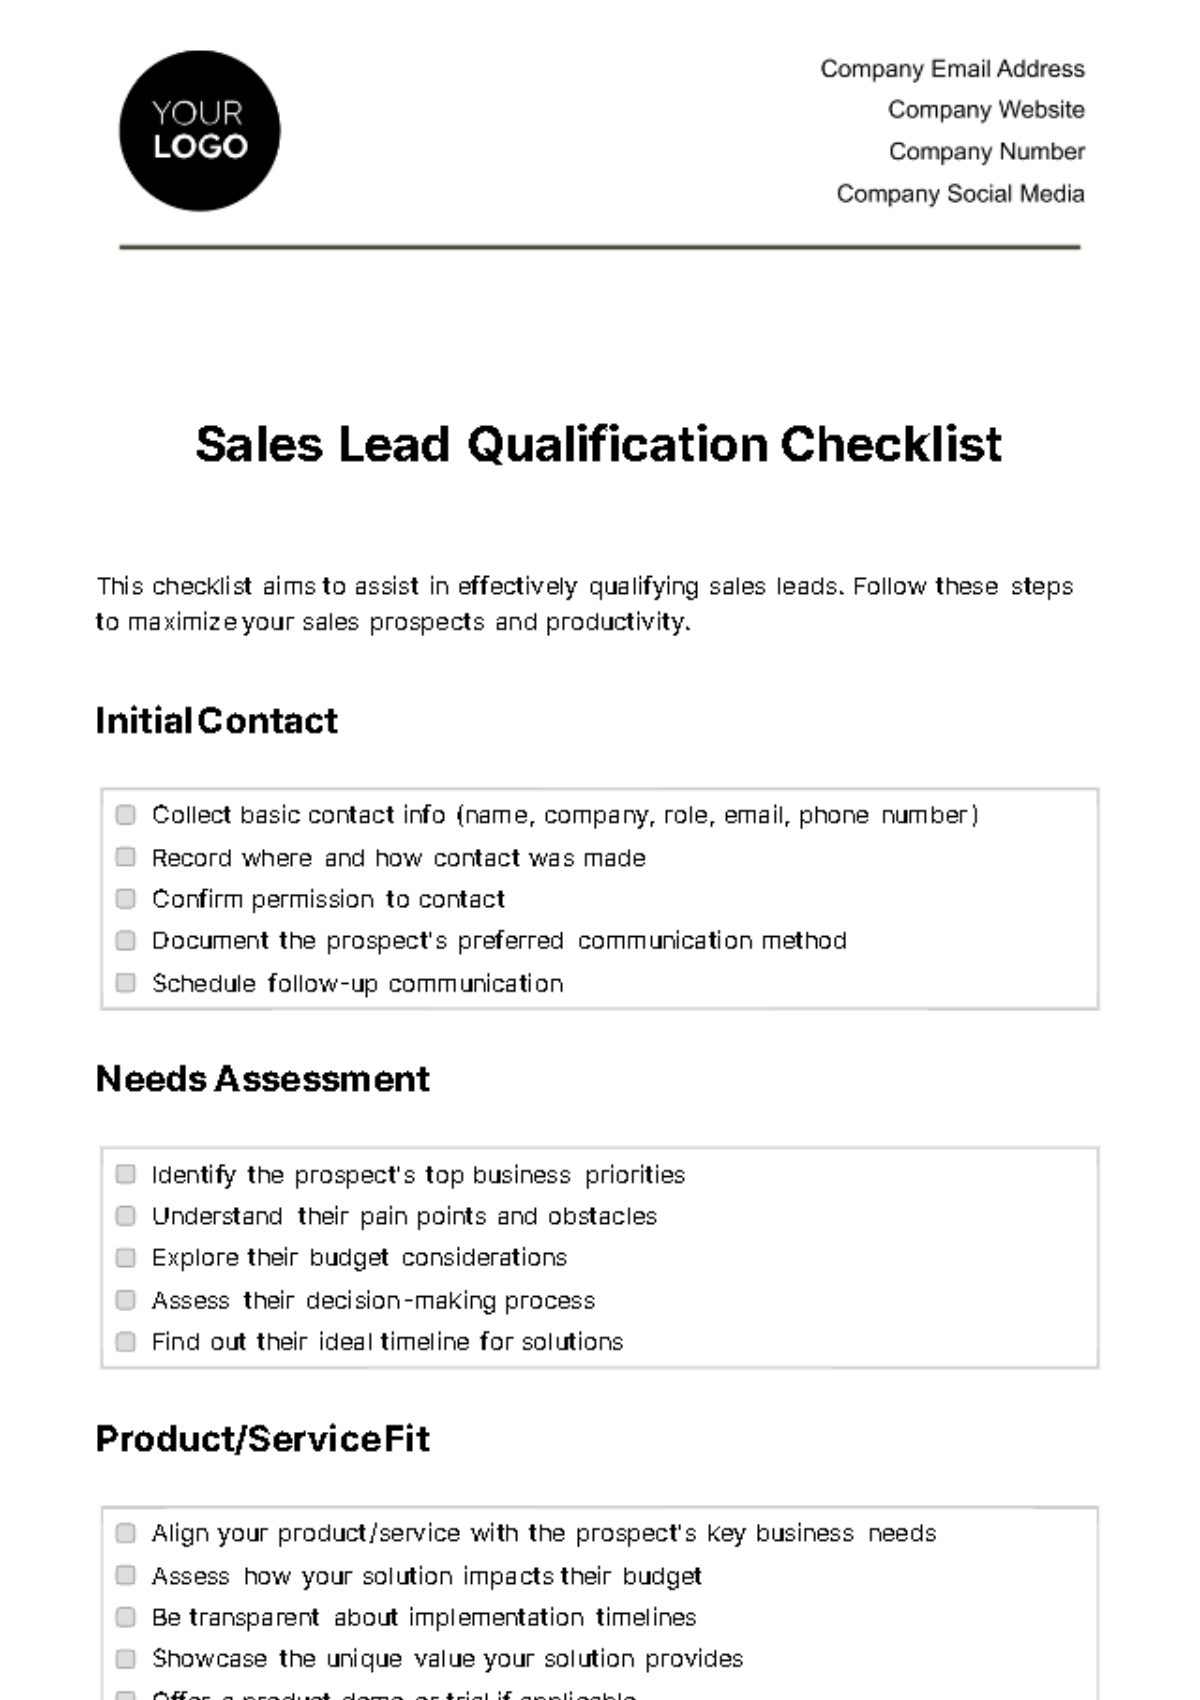 Sales Lead Qualification Checklist Template